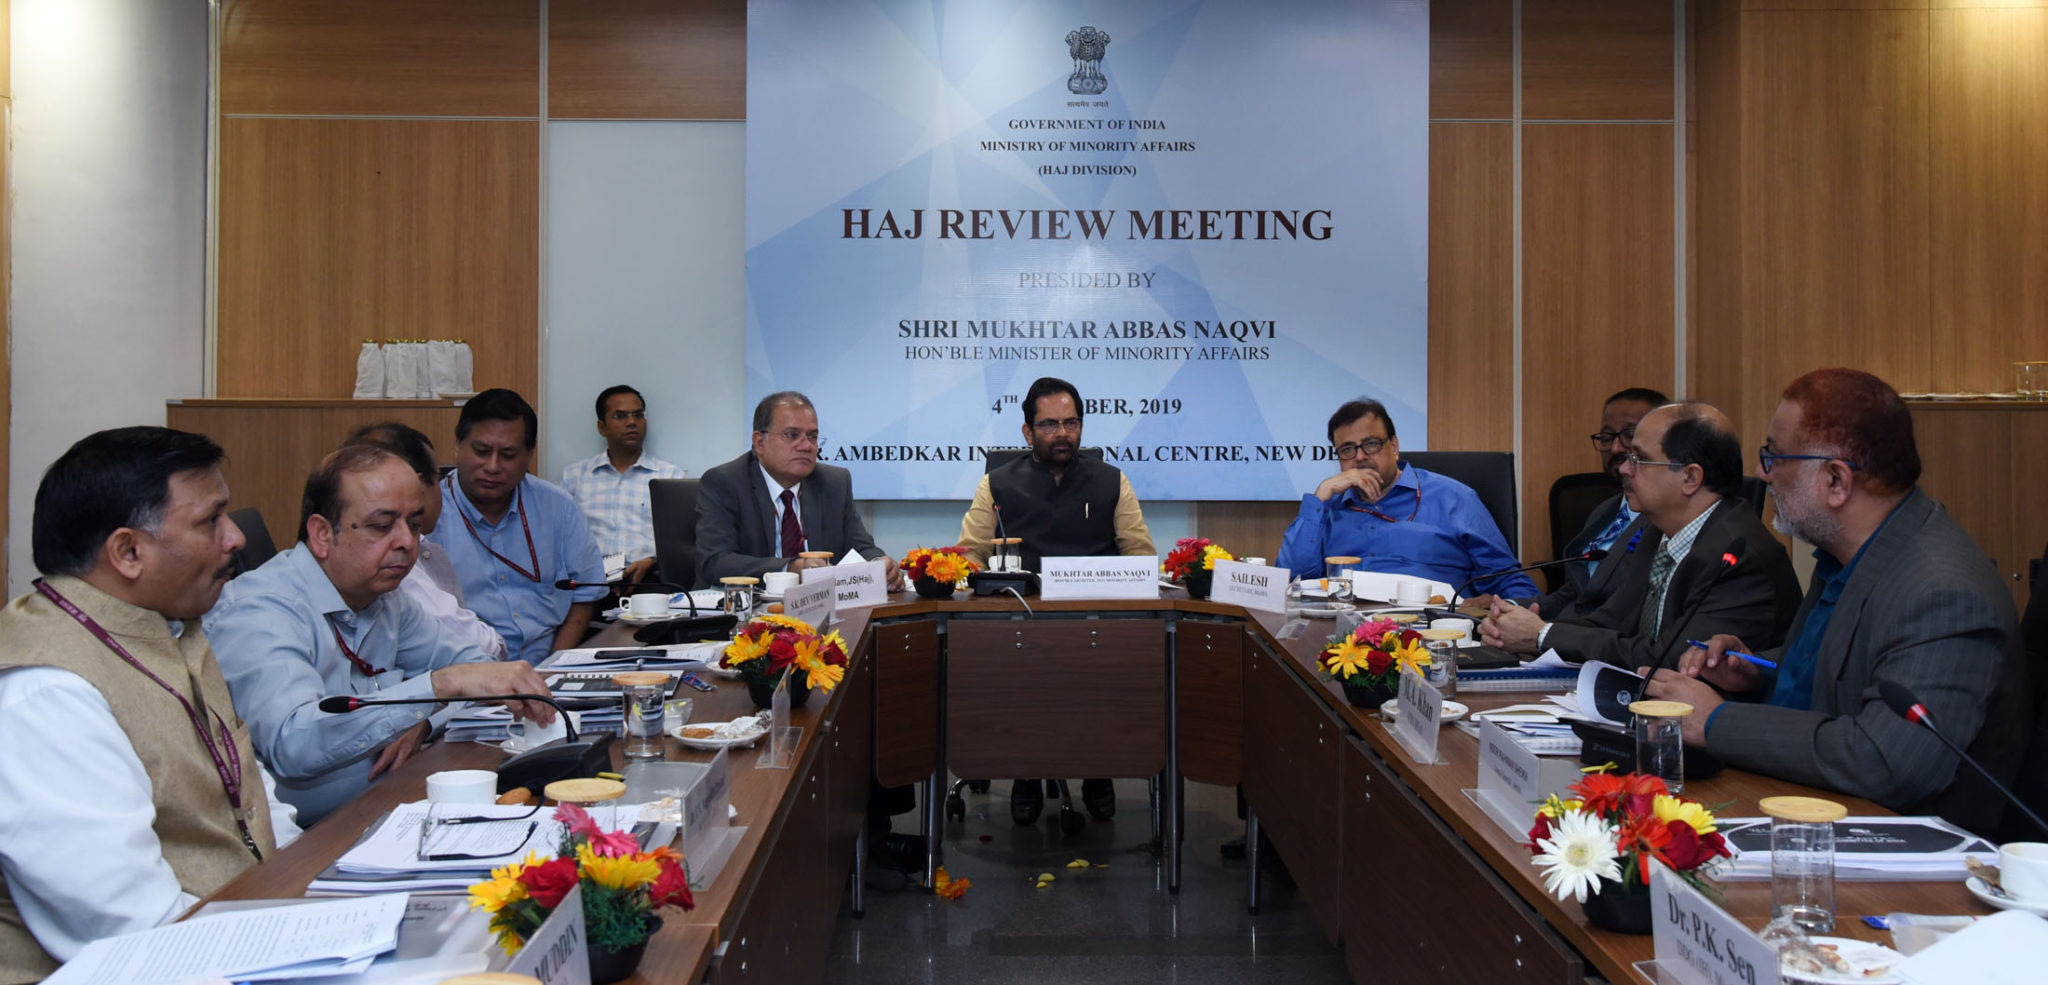 minister-shri-mukhtar-abbas-naqvi-chairs-a-meeting-to-review-haj-2019-and-preparation-for-haj-2020